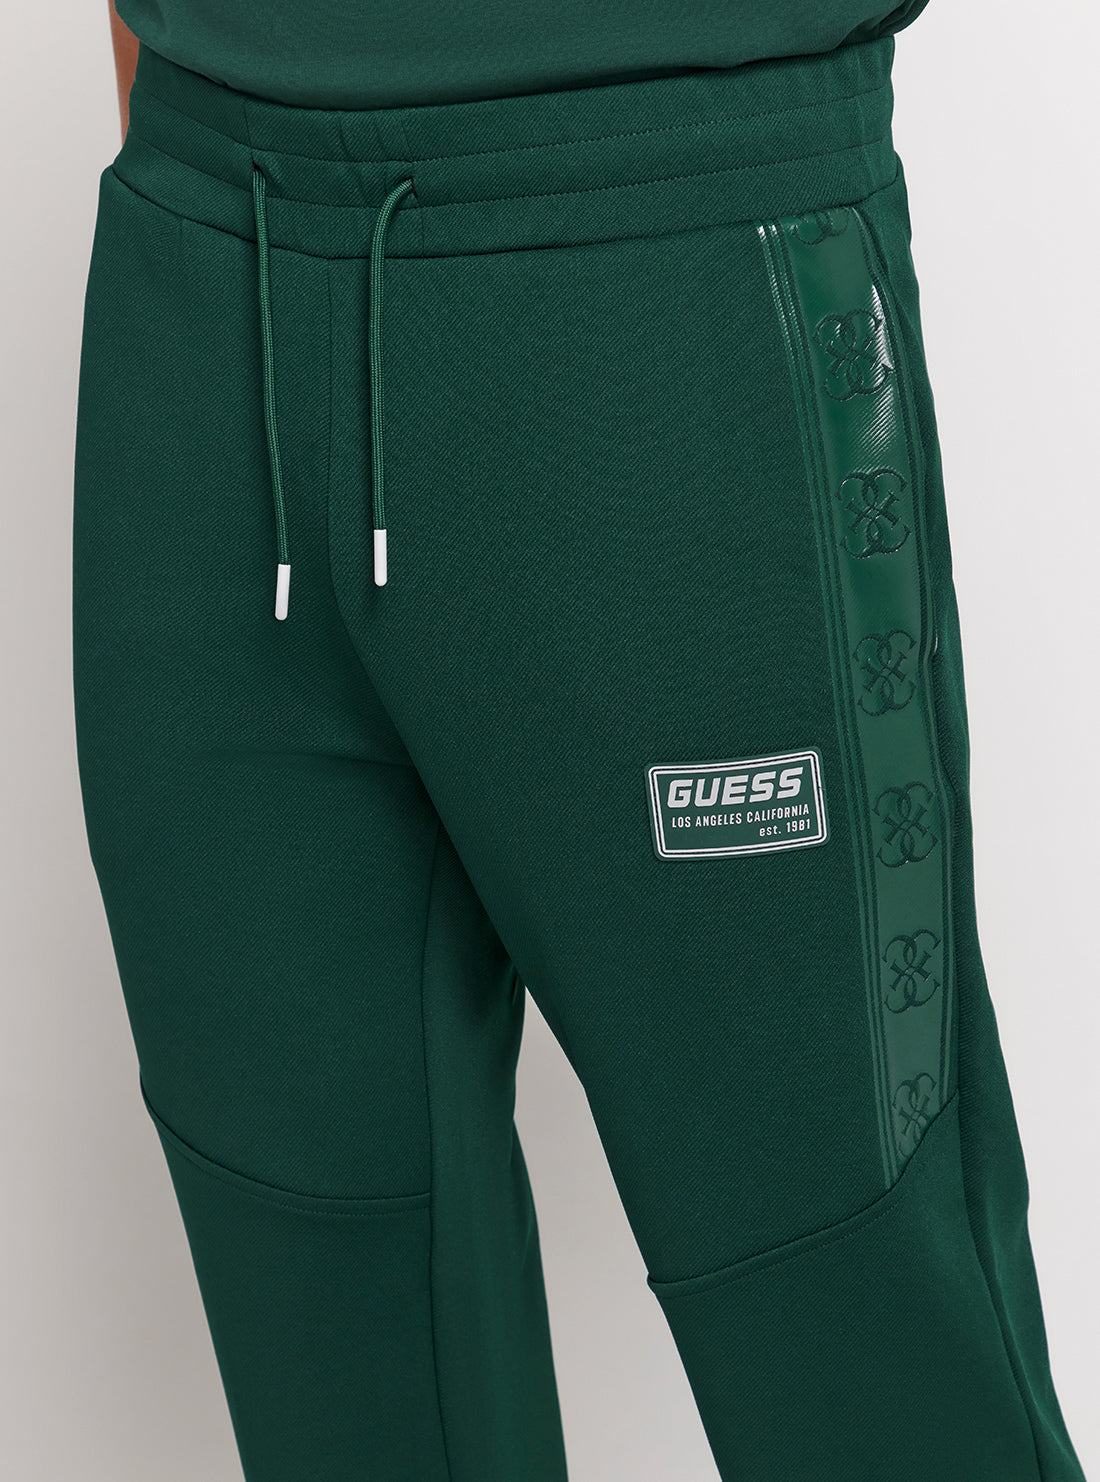 GUESS Green Gaston Cuffed Pants detail view